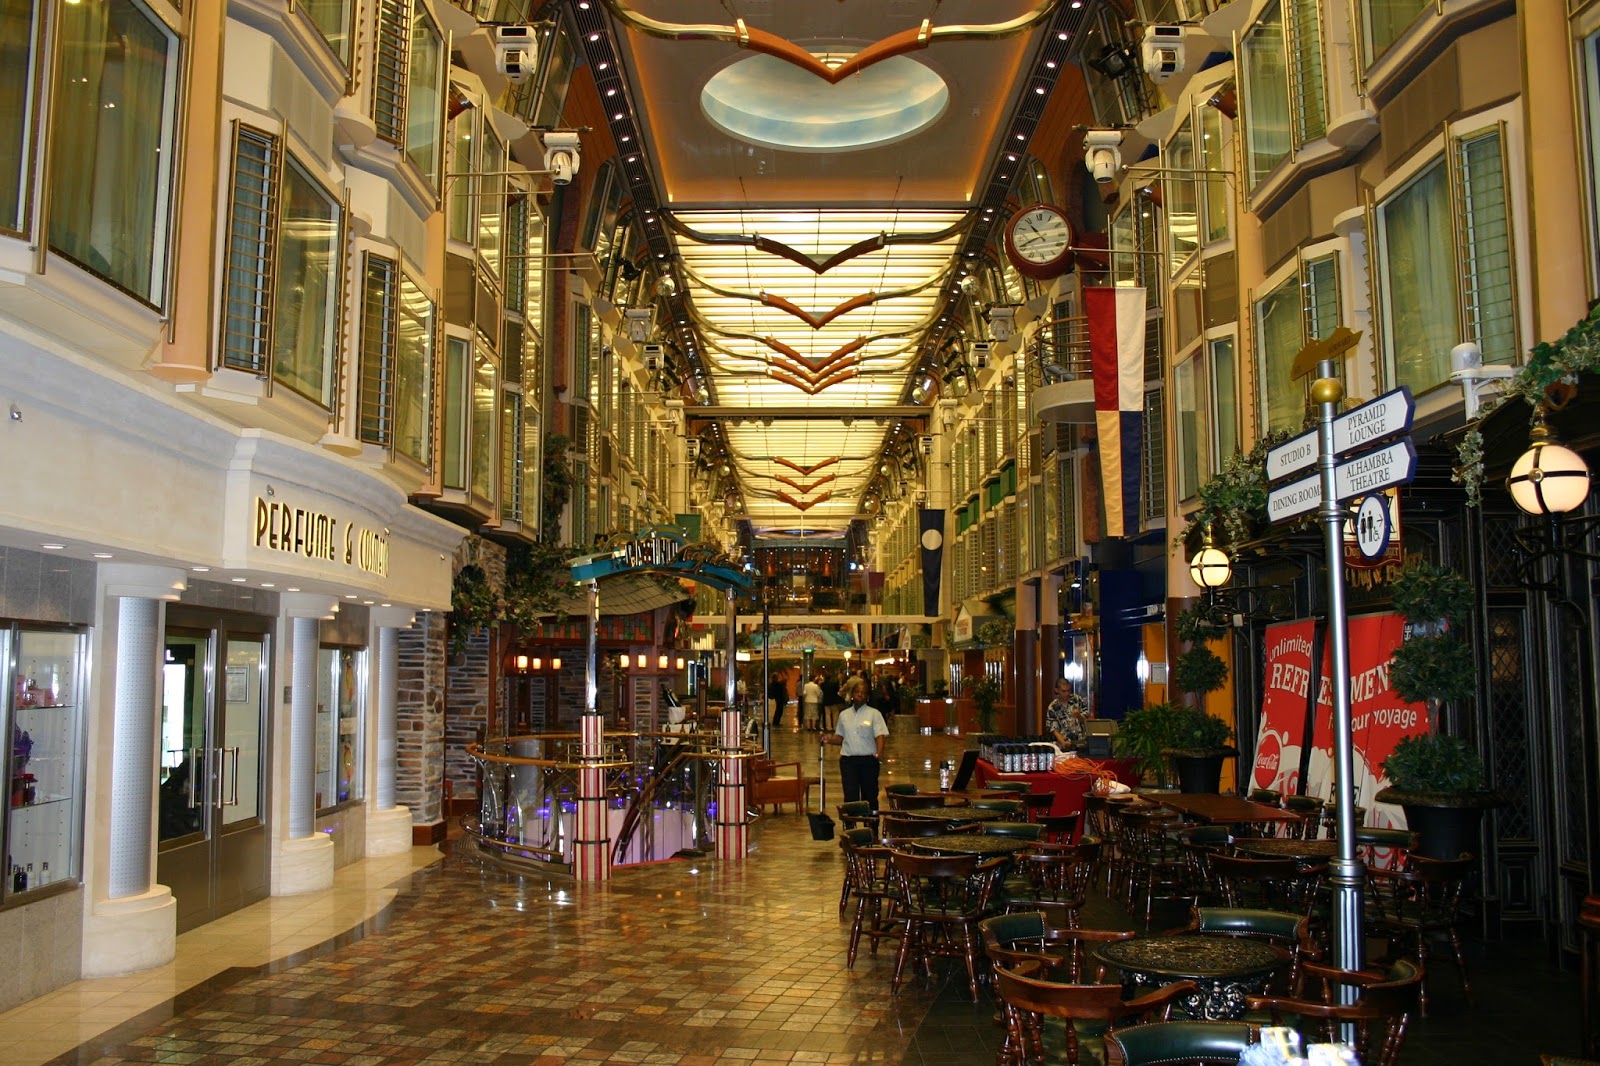 The Royal Promenade Shopping Center in a Royal Caribbean Cruise